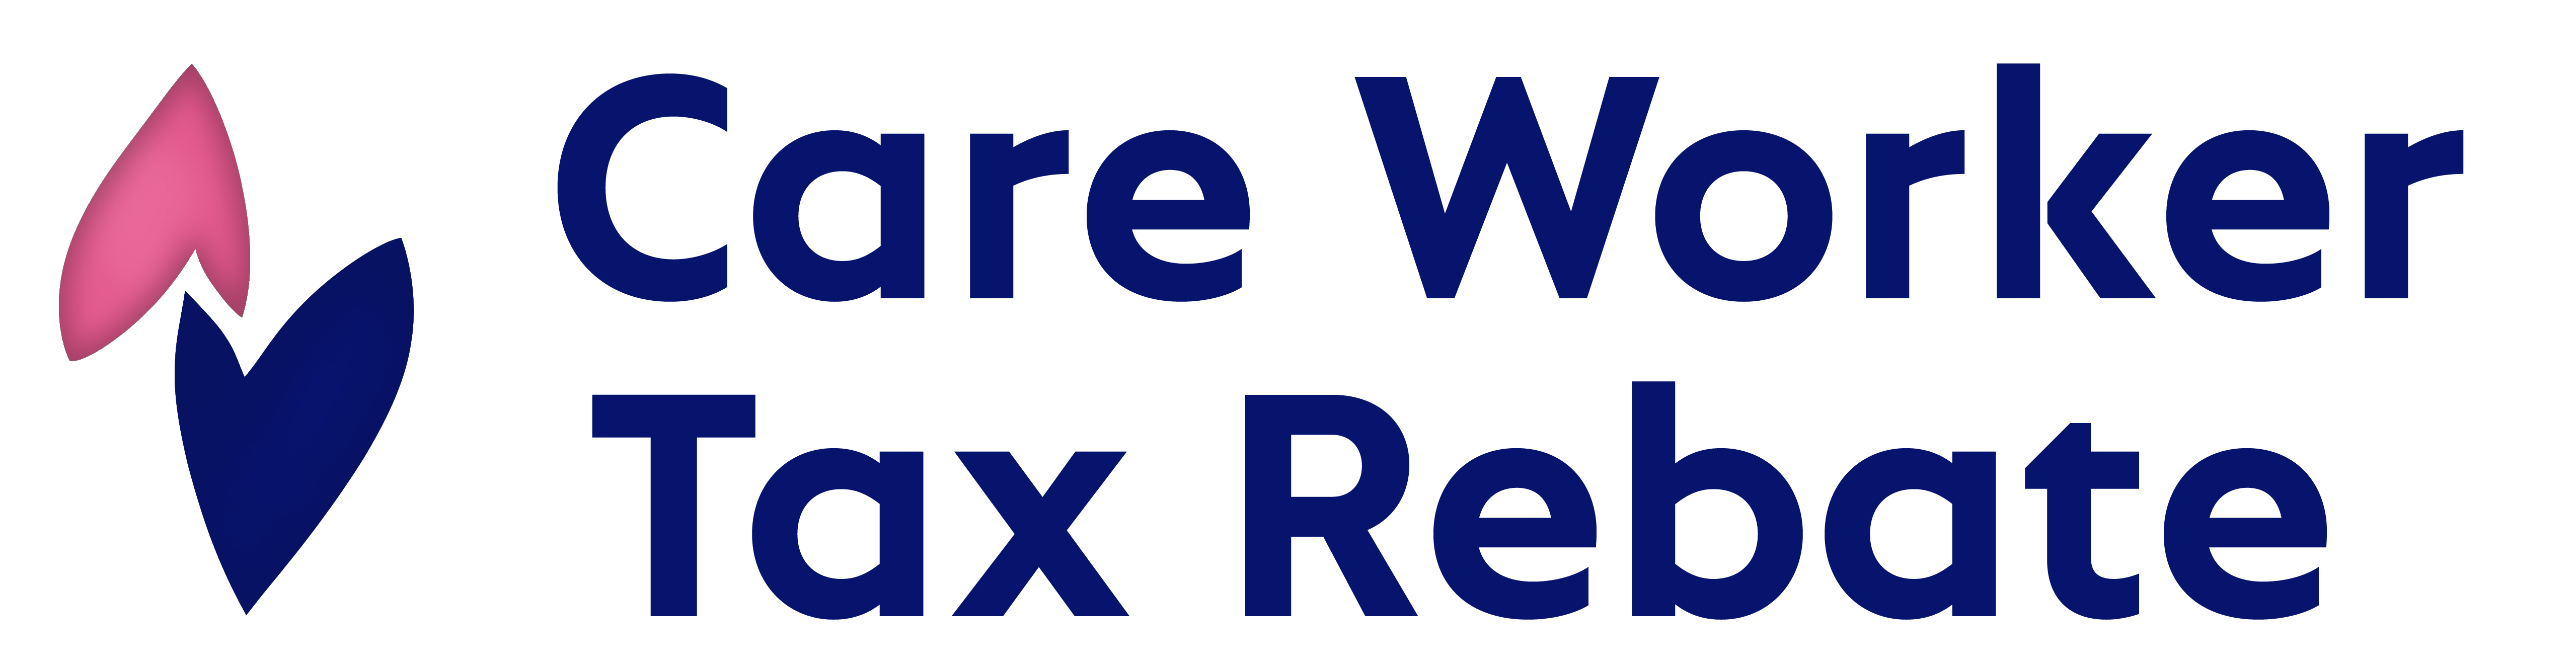 Care Worker Tax Rebate Reviews